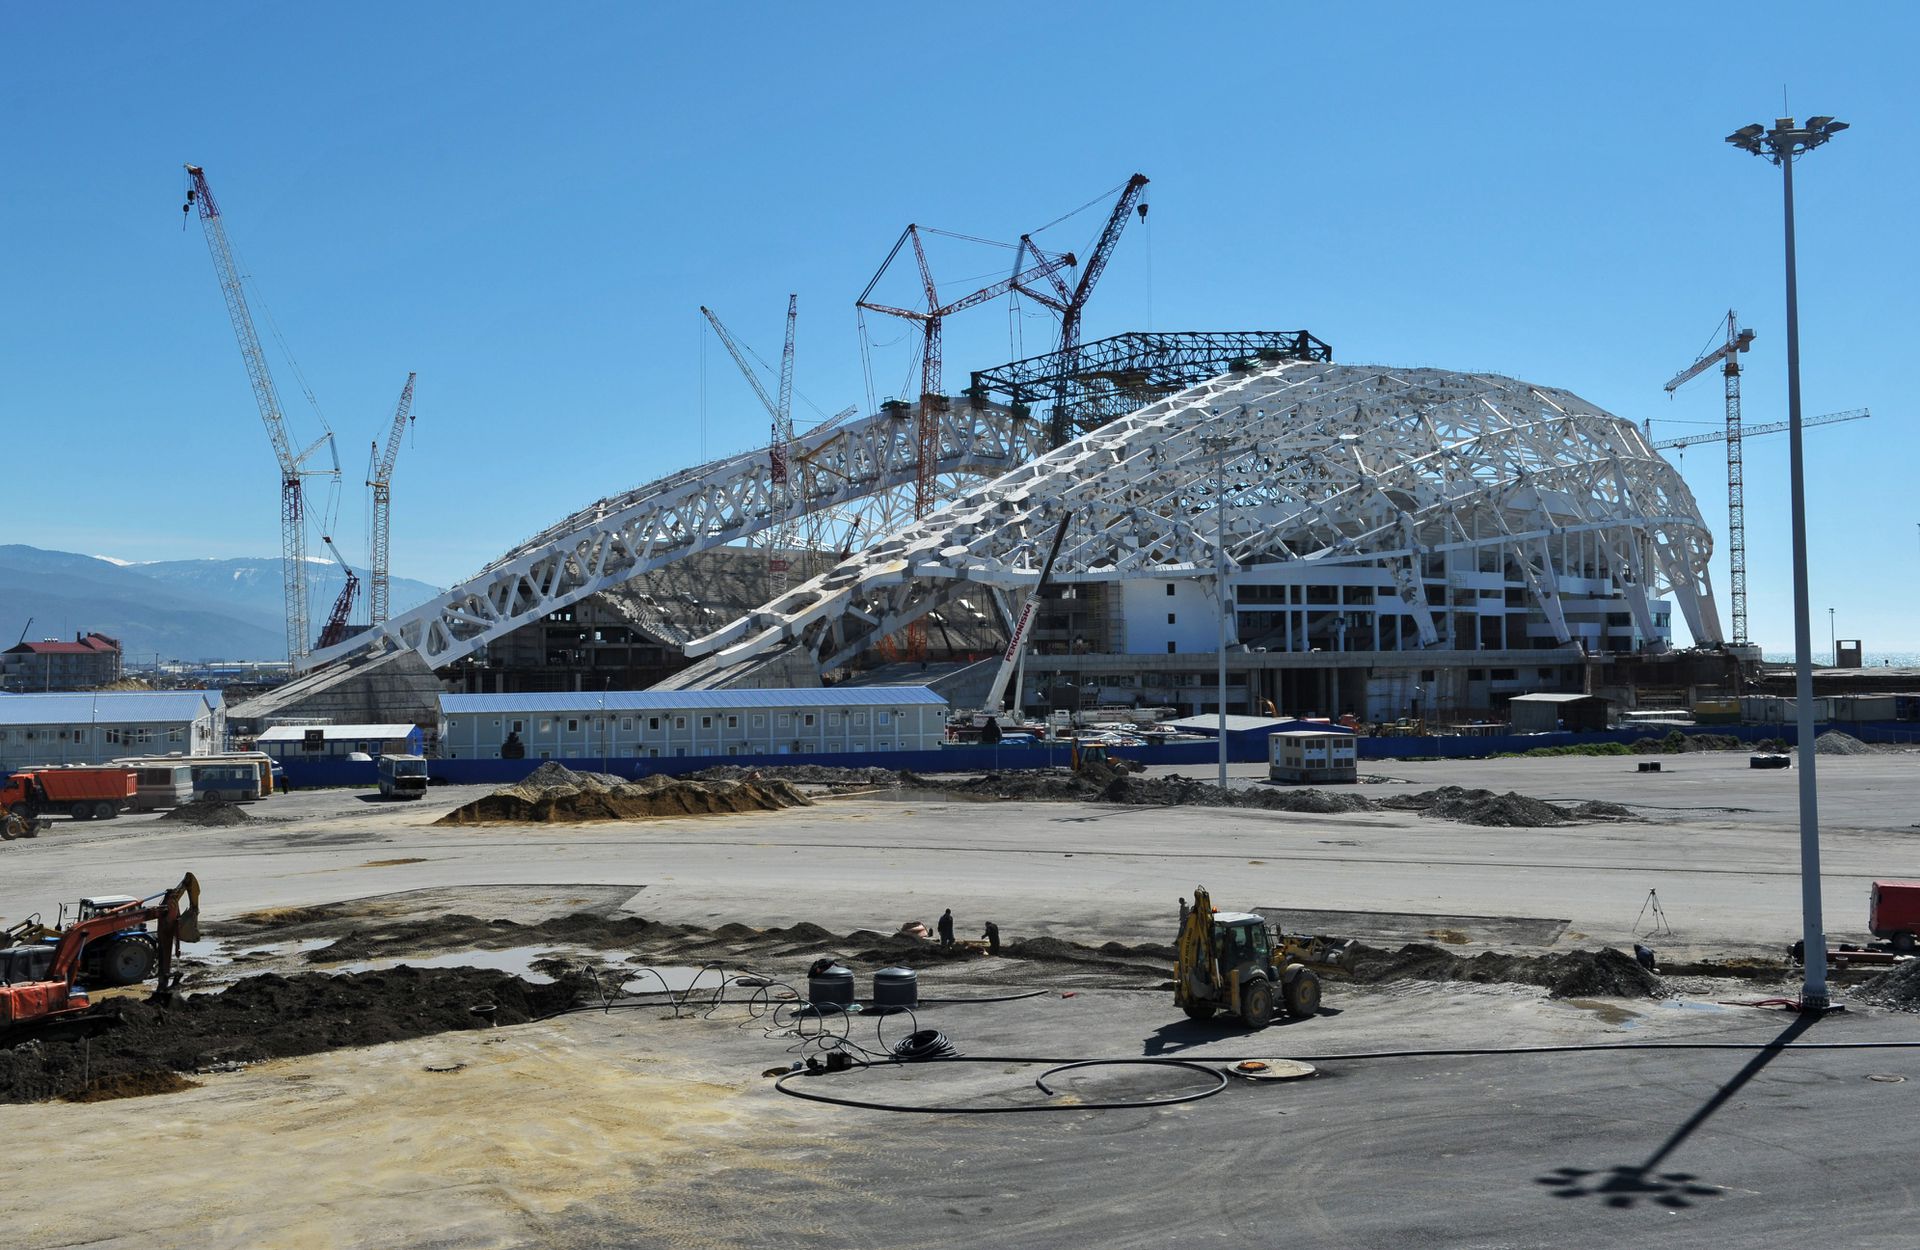 Олимпийский стадион сочи